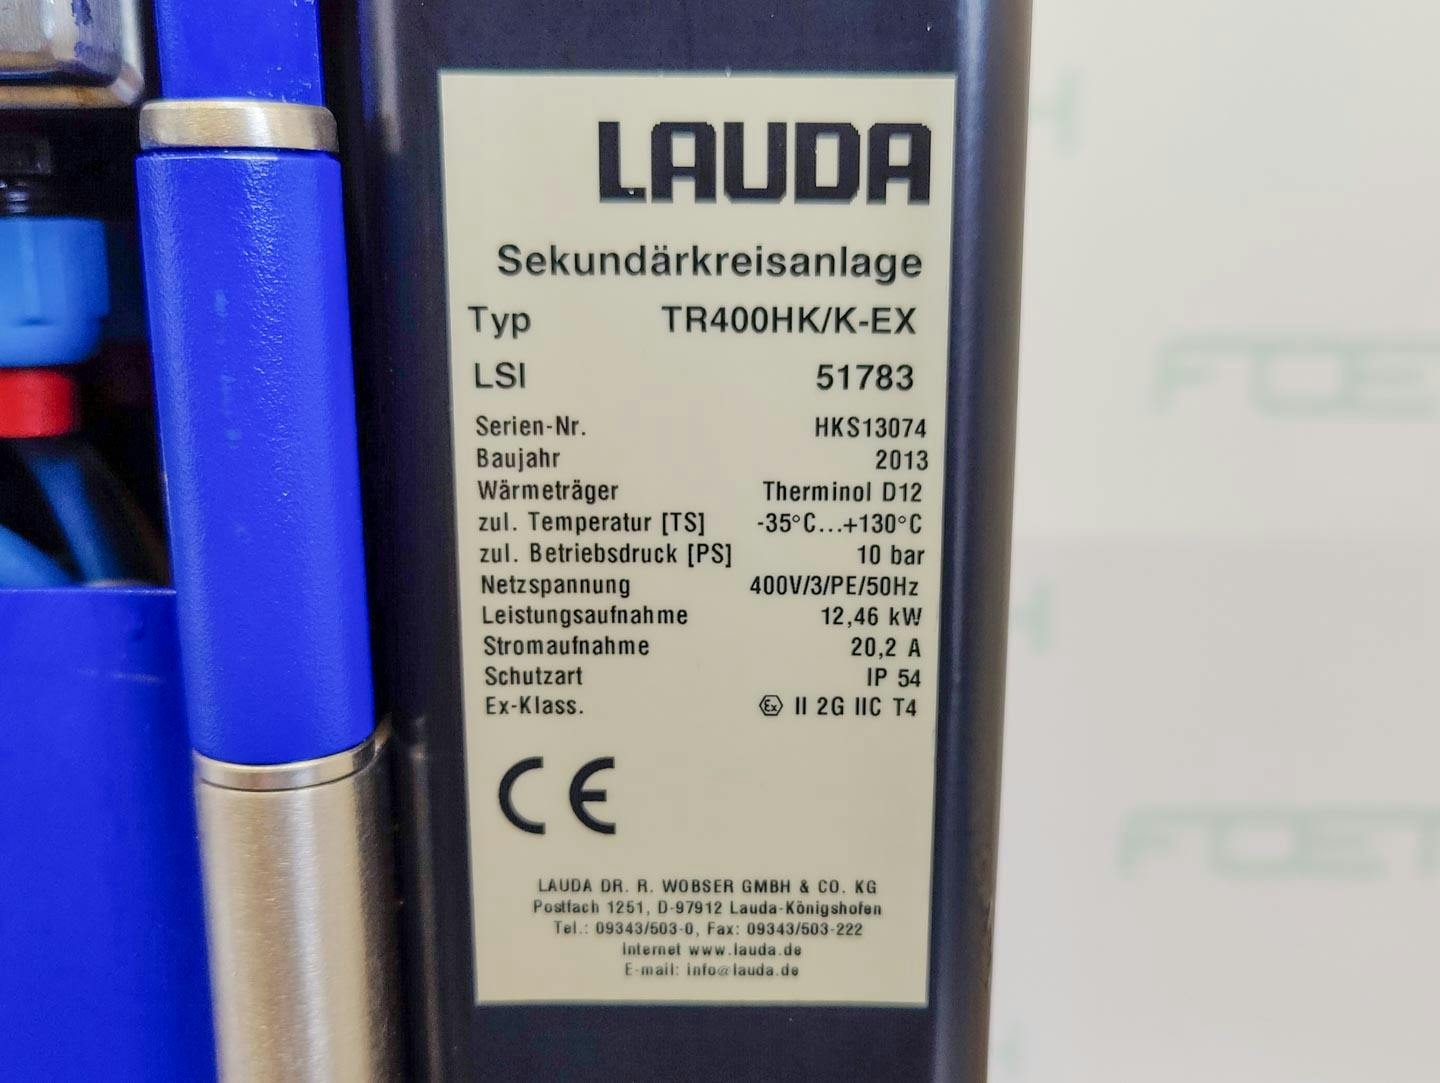 Lauda TR400 HK/KT-EX "secondary circuit system" - Temperiergerät - image 16